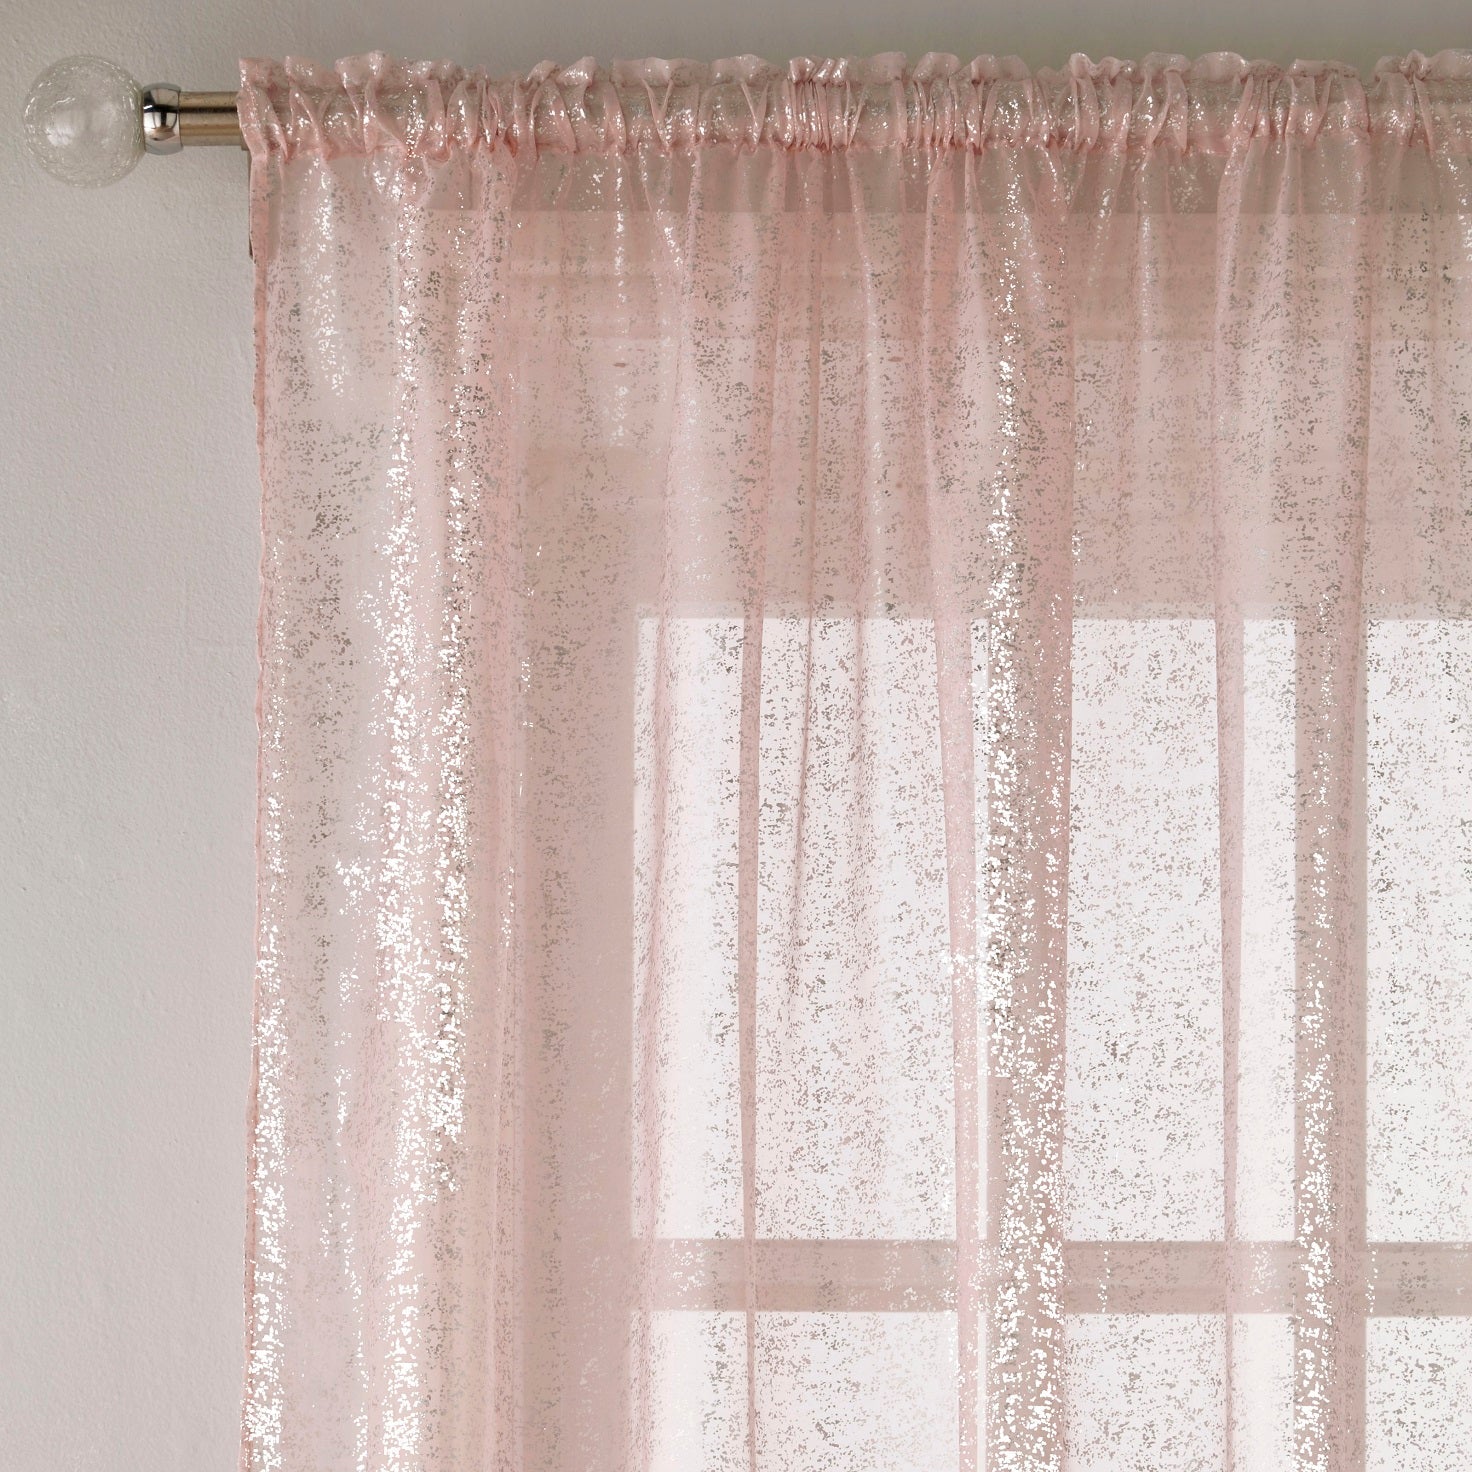 55x54" Pandora Voile Net Curtains Panel - Blush Pink & Silver